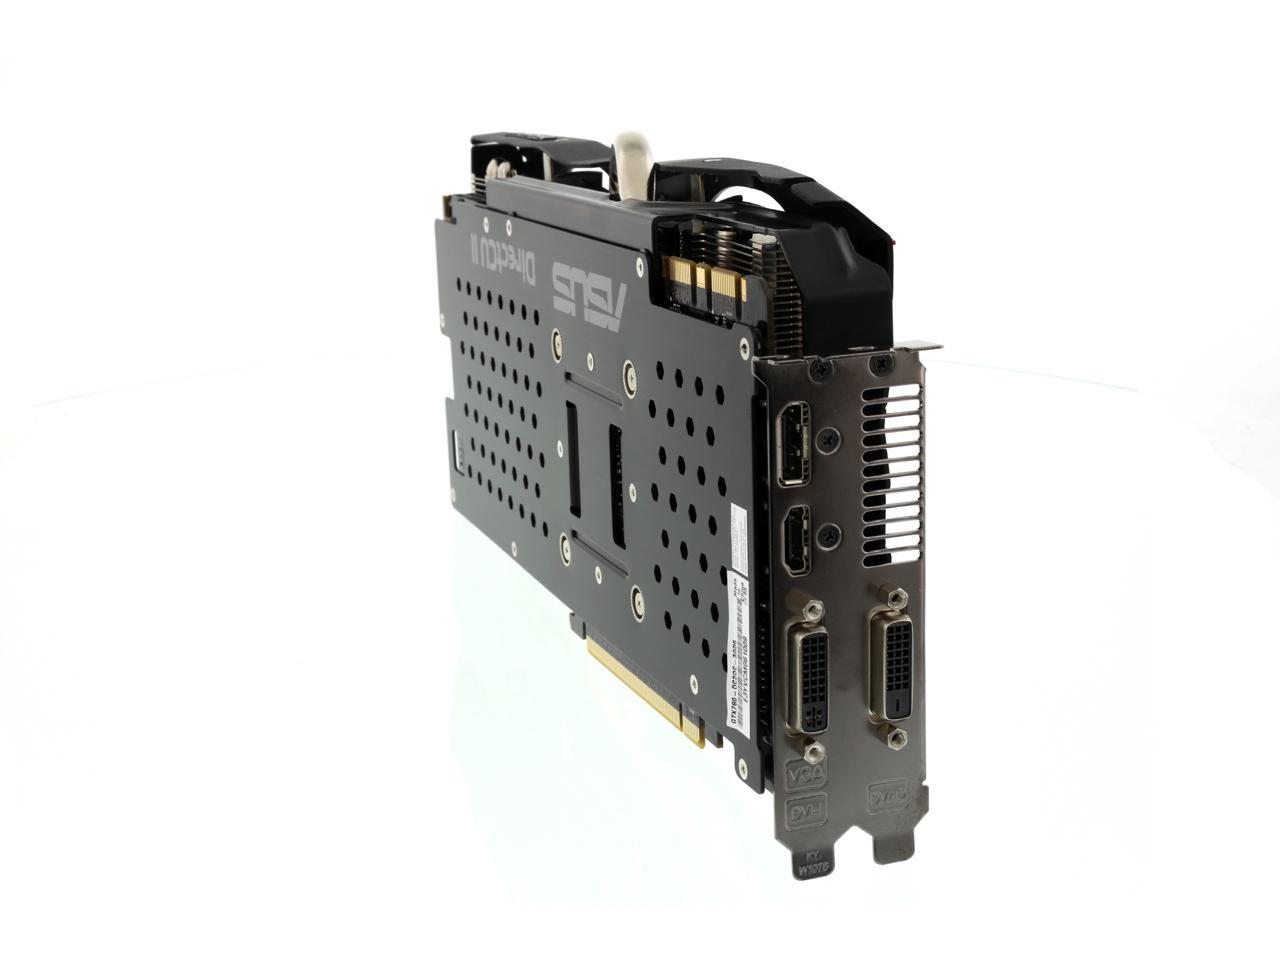 ASUS GeForce GTX 780 Video Card GTX780-DC2OC-3GD5 - Newegg.com